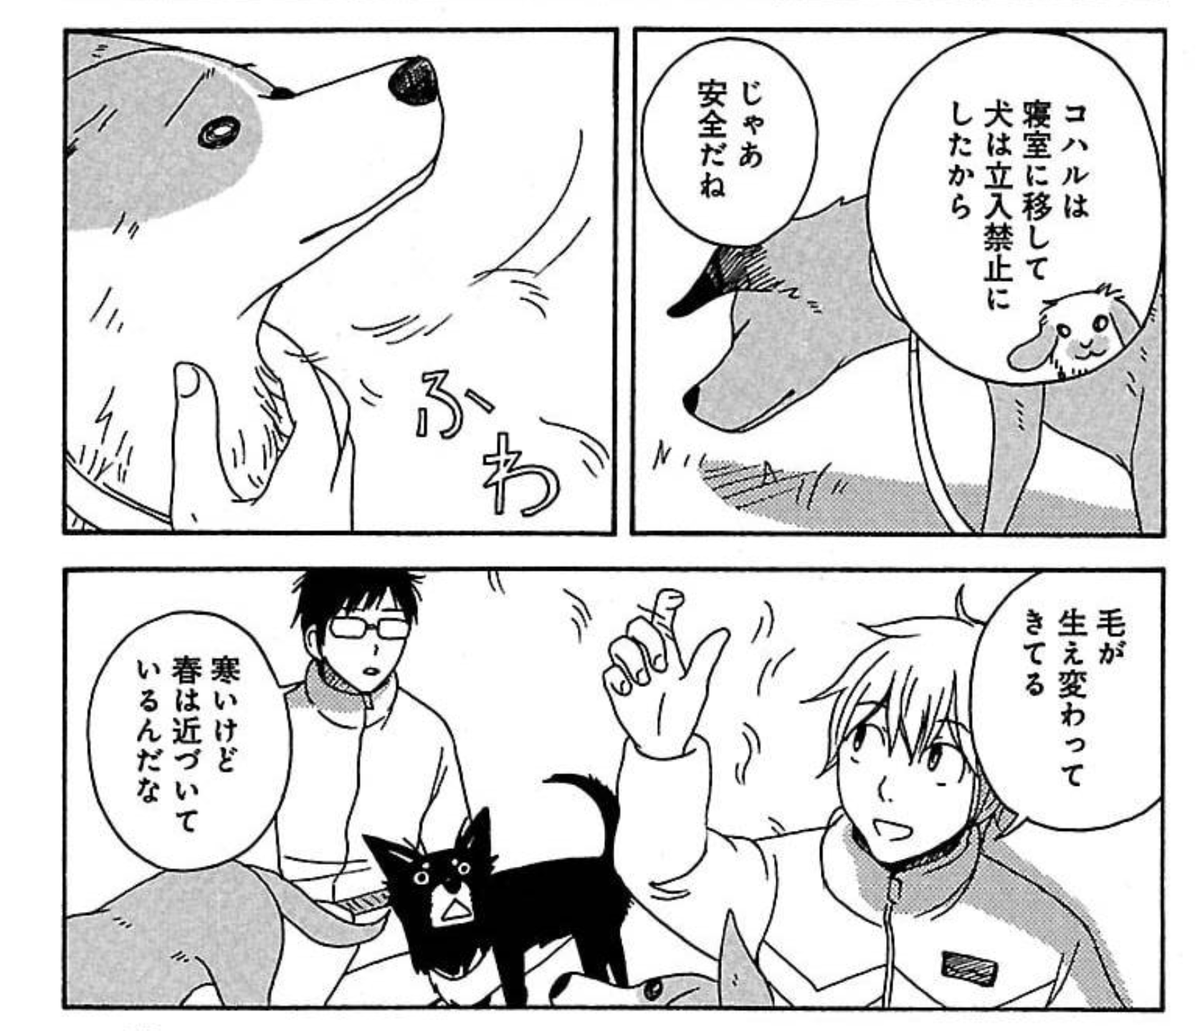 【Kindle】秋田書店のコミックスセールで、「ツヅキくんと犬部のこと」上下巻「新月を左に旋回」49%ポイント還元中
 https://t.co/Cl1ZzfkmeC 